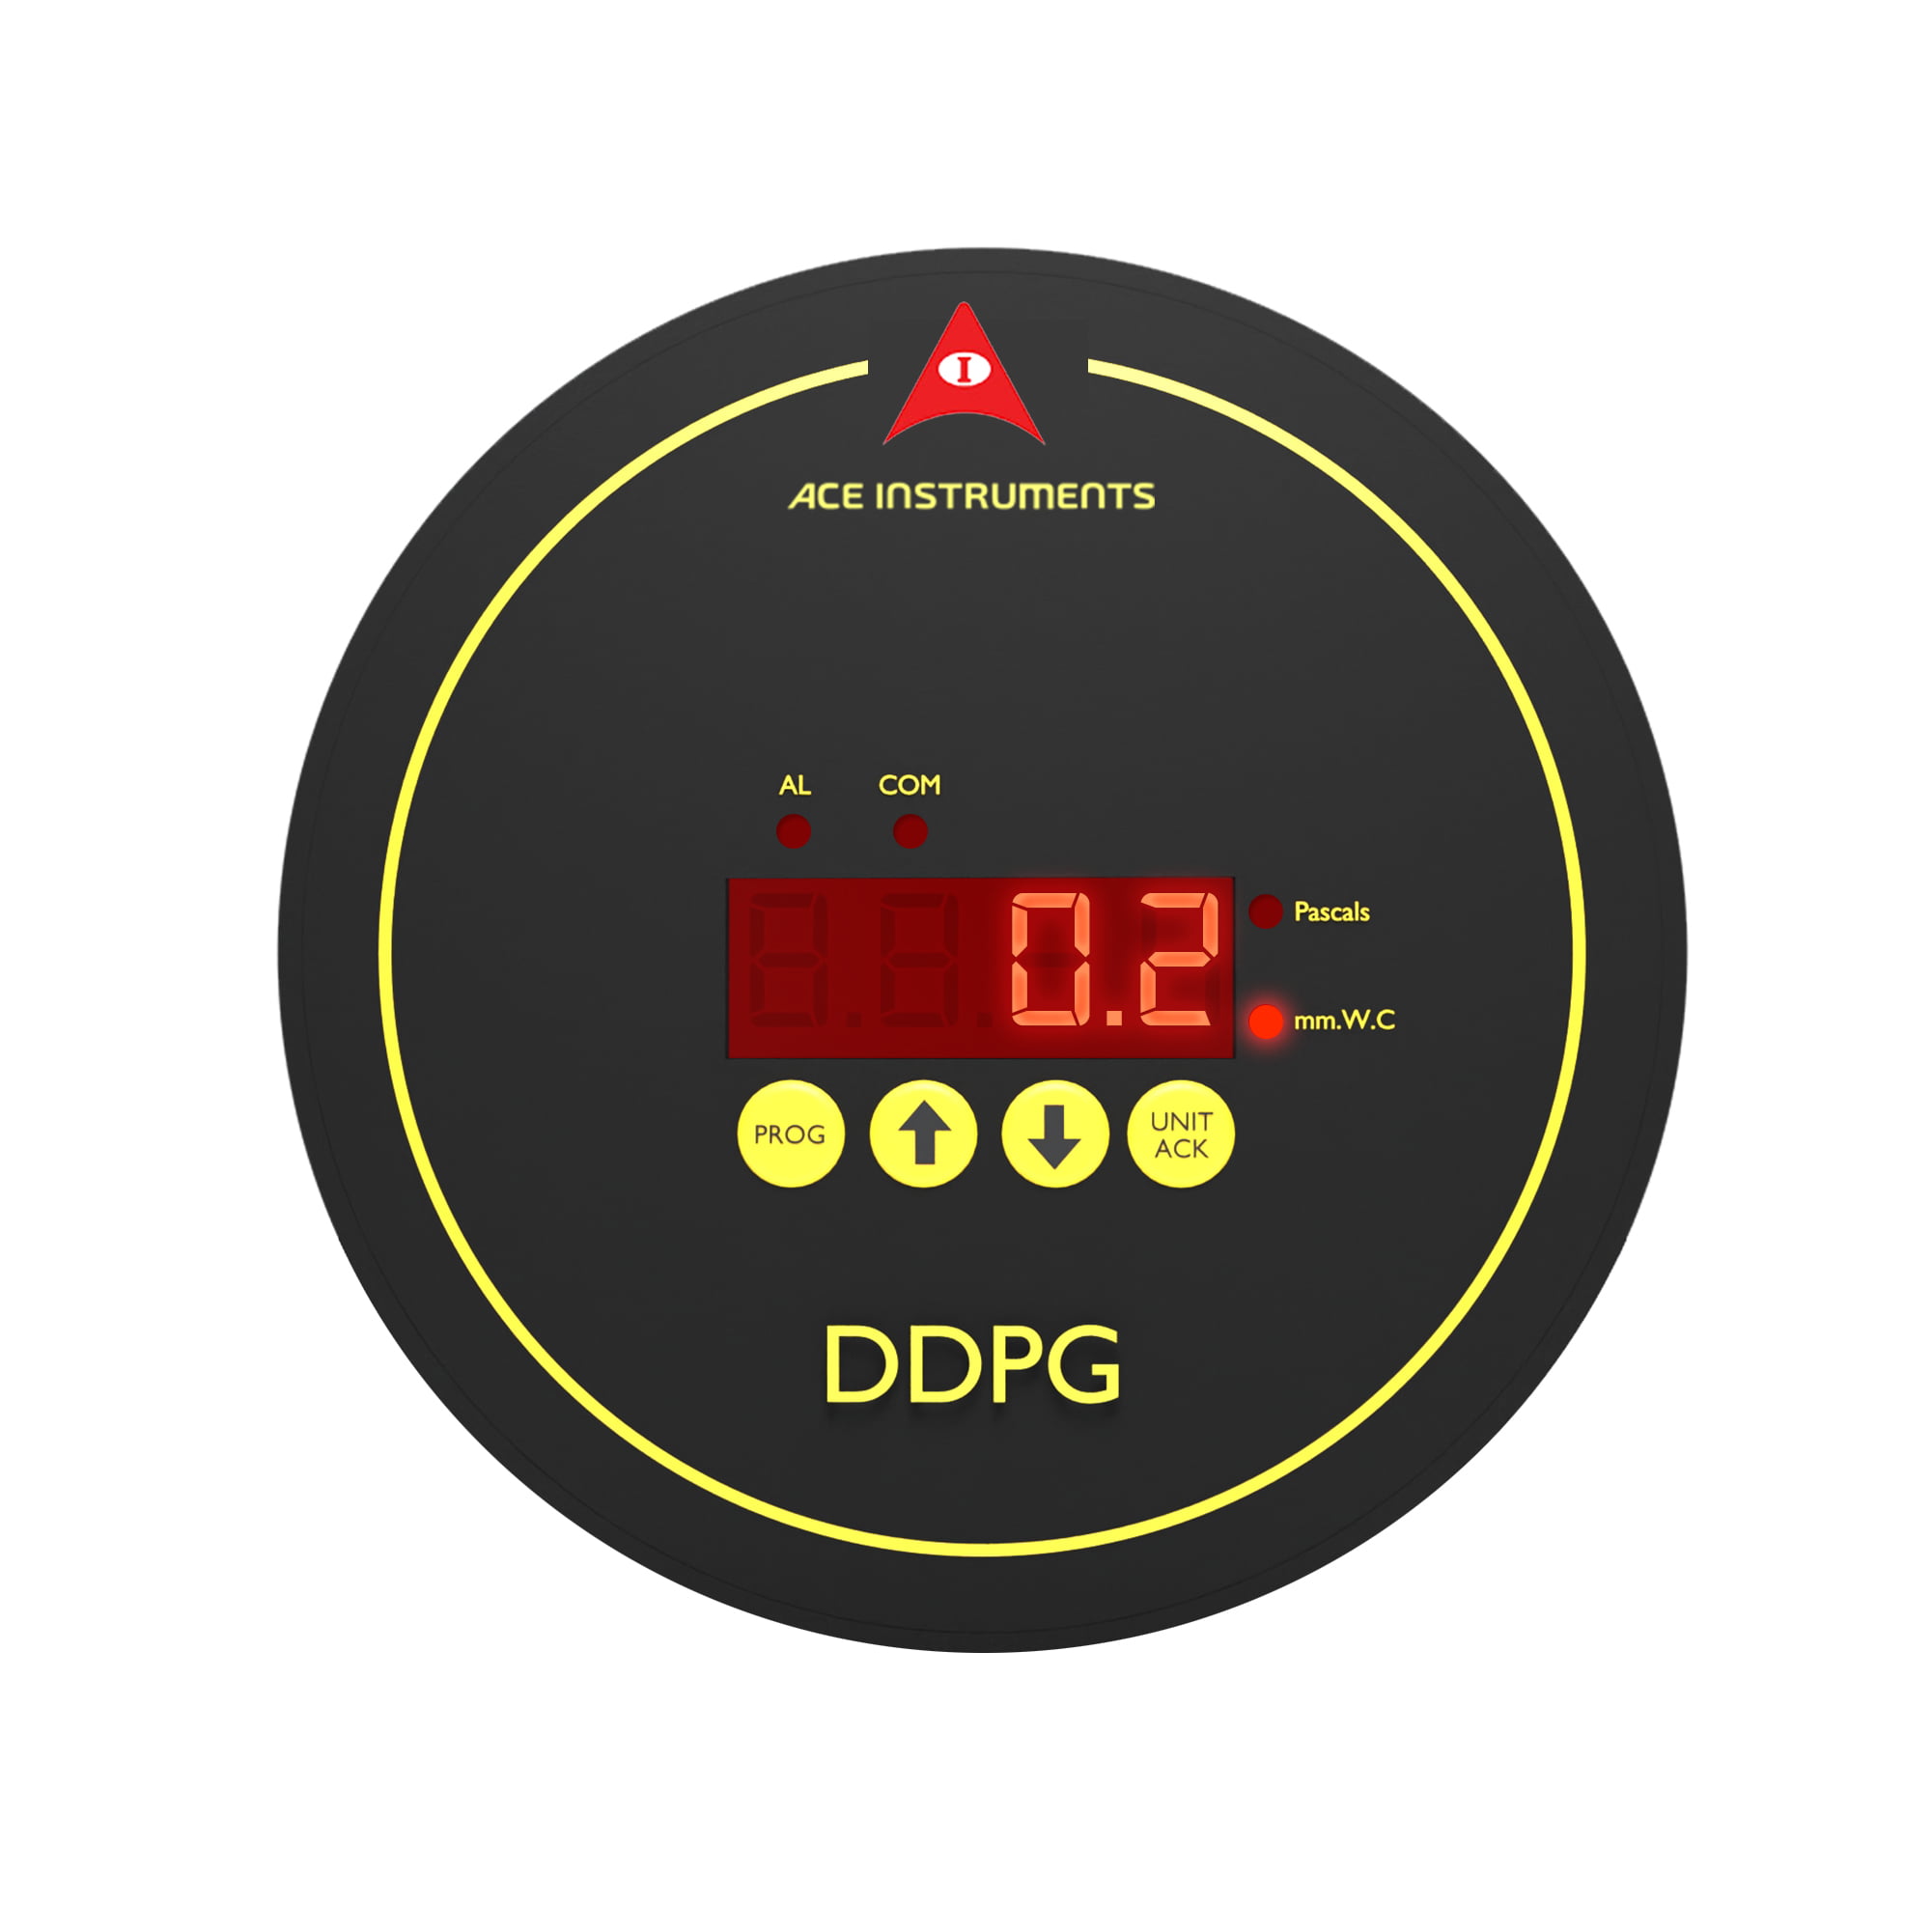 Differential pressure gauge